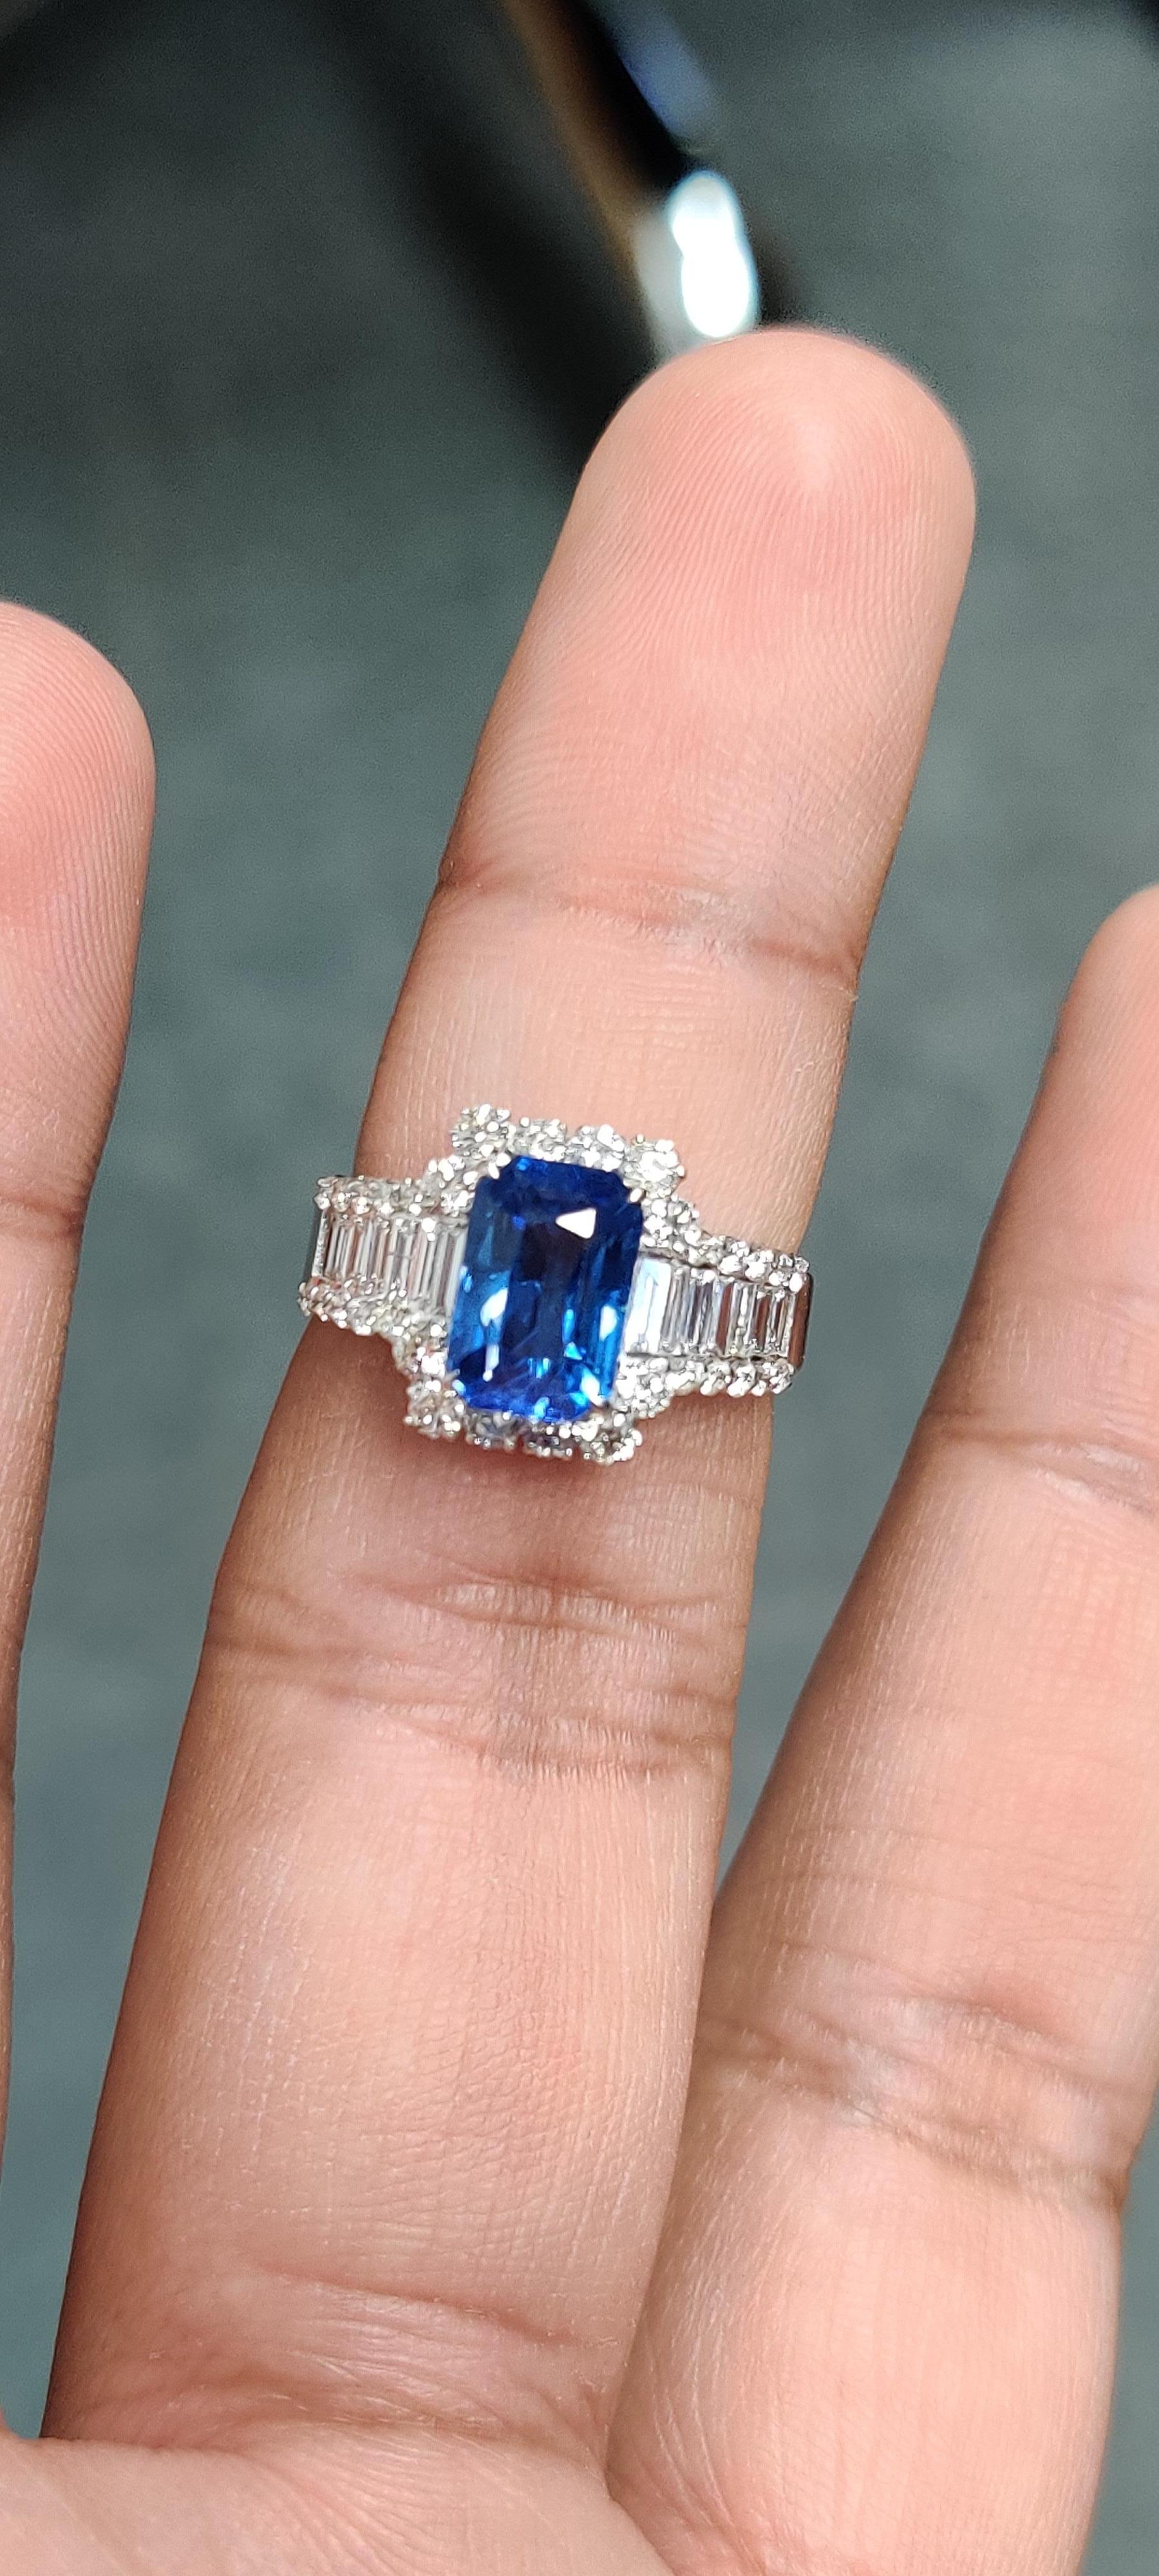 Radiant Cut 2.87 Carat Ceylon Blue Sapphire Diamond Cocktail Ring For Sale